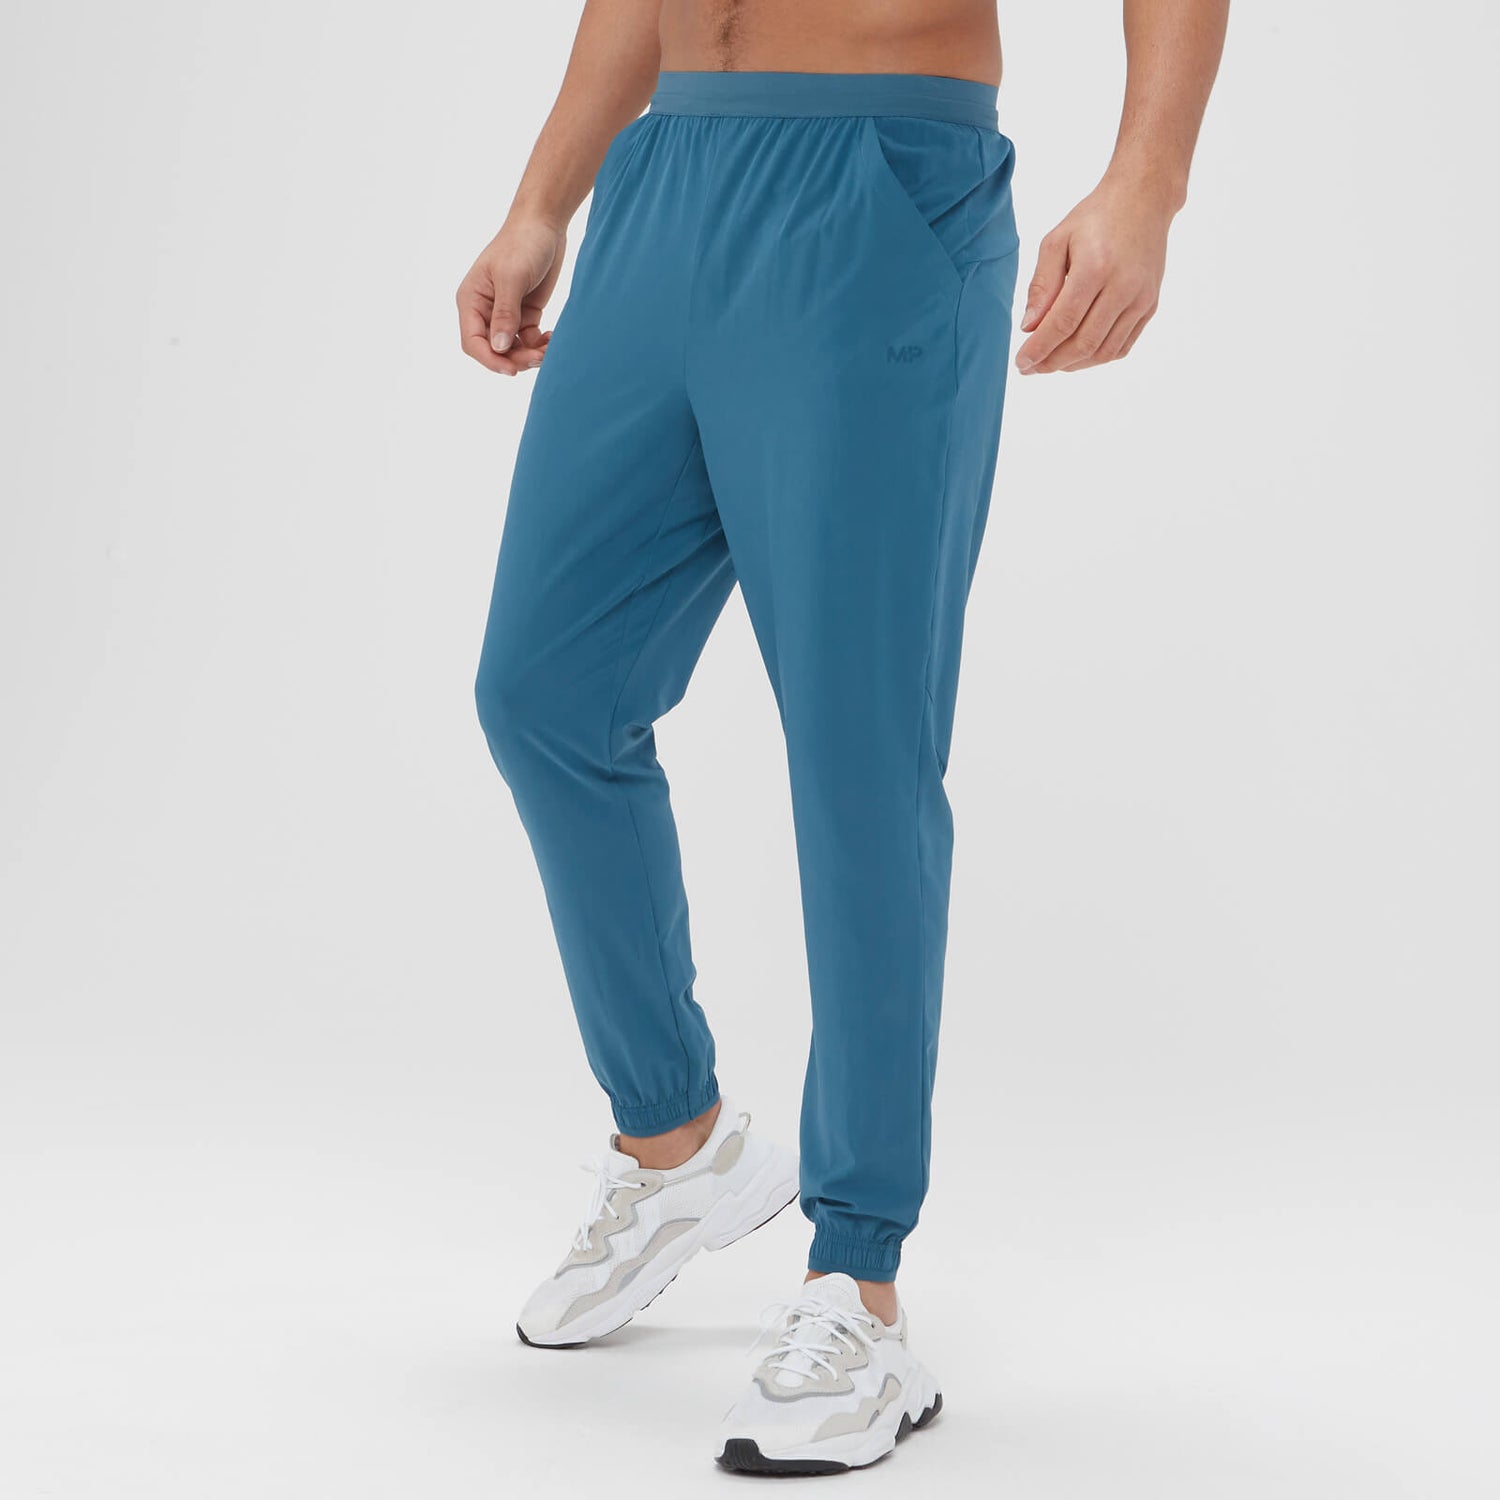 Pantalón deportivo tejido Composure para hombre de MP - Azul verde azulado - XS